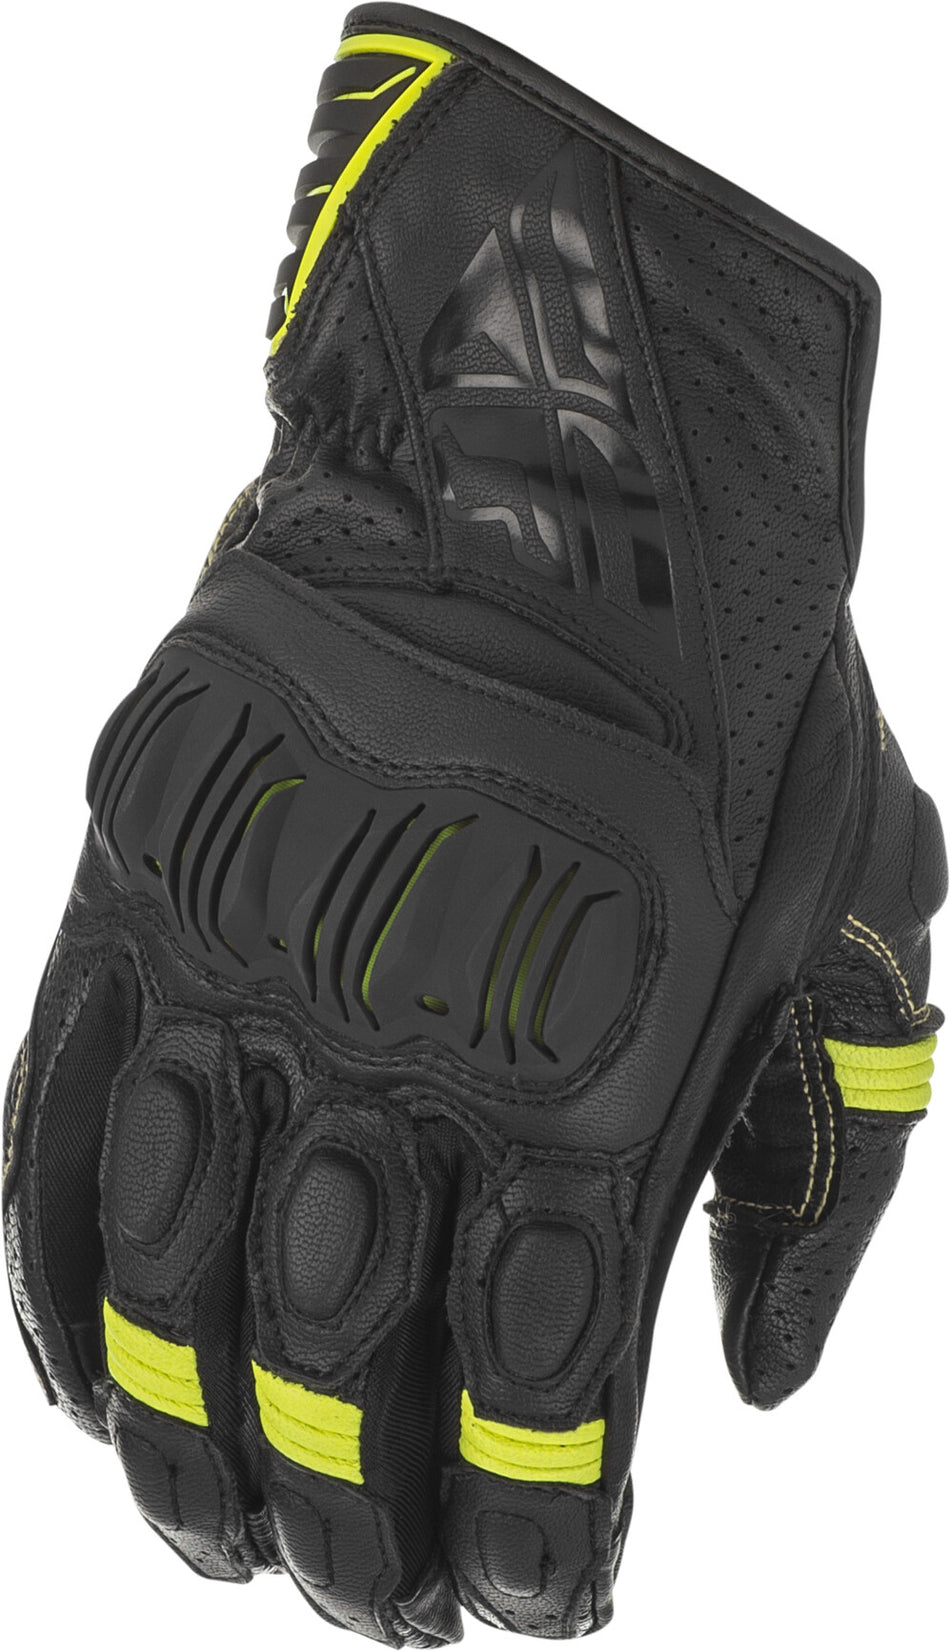 FLY RACING Brawler Gloves Black/Hi-Vis Sm 476-2091S